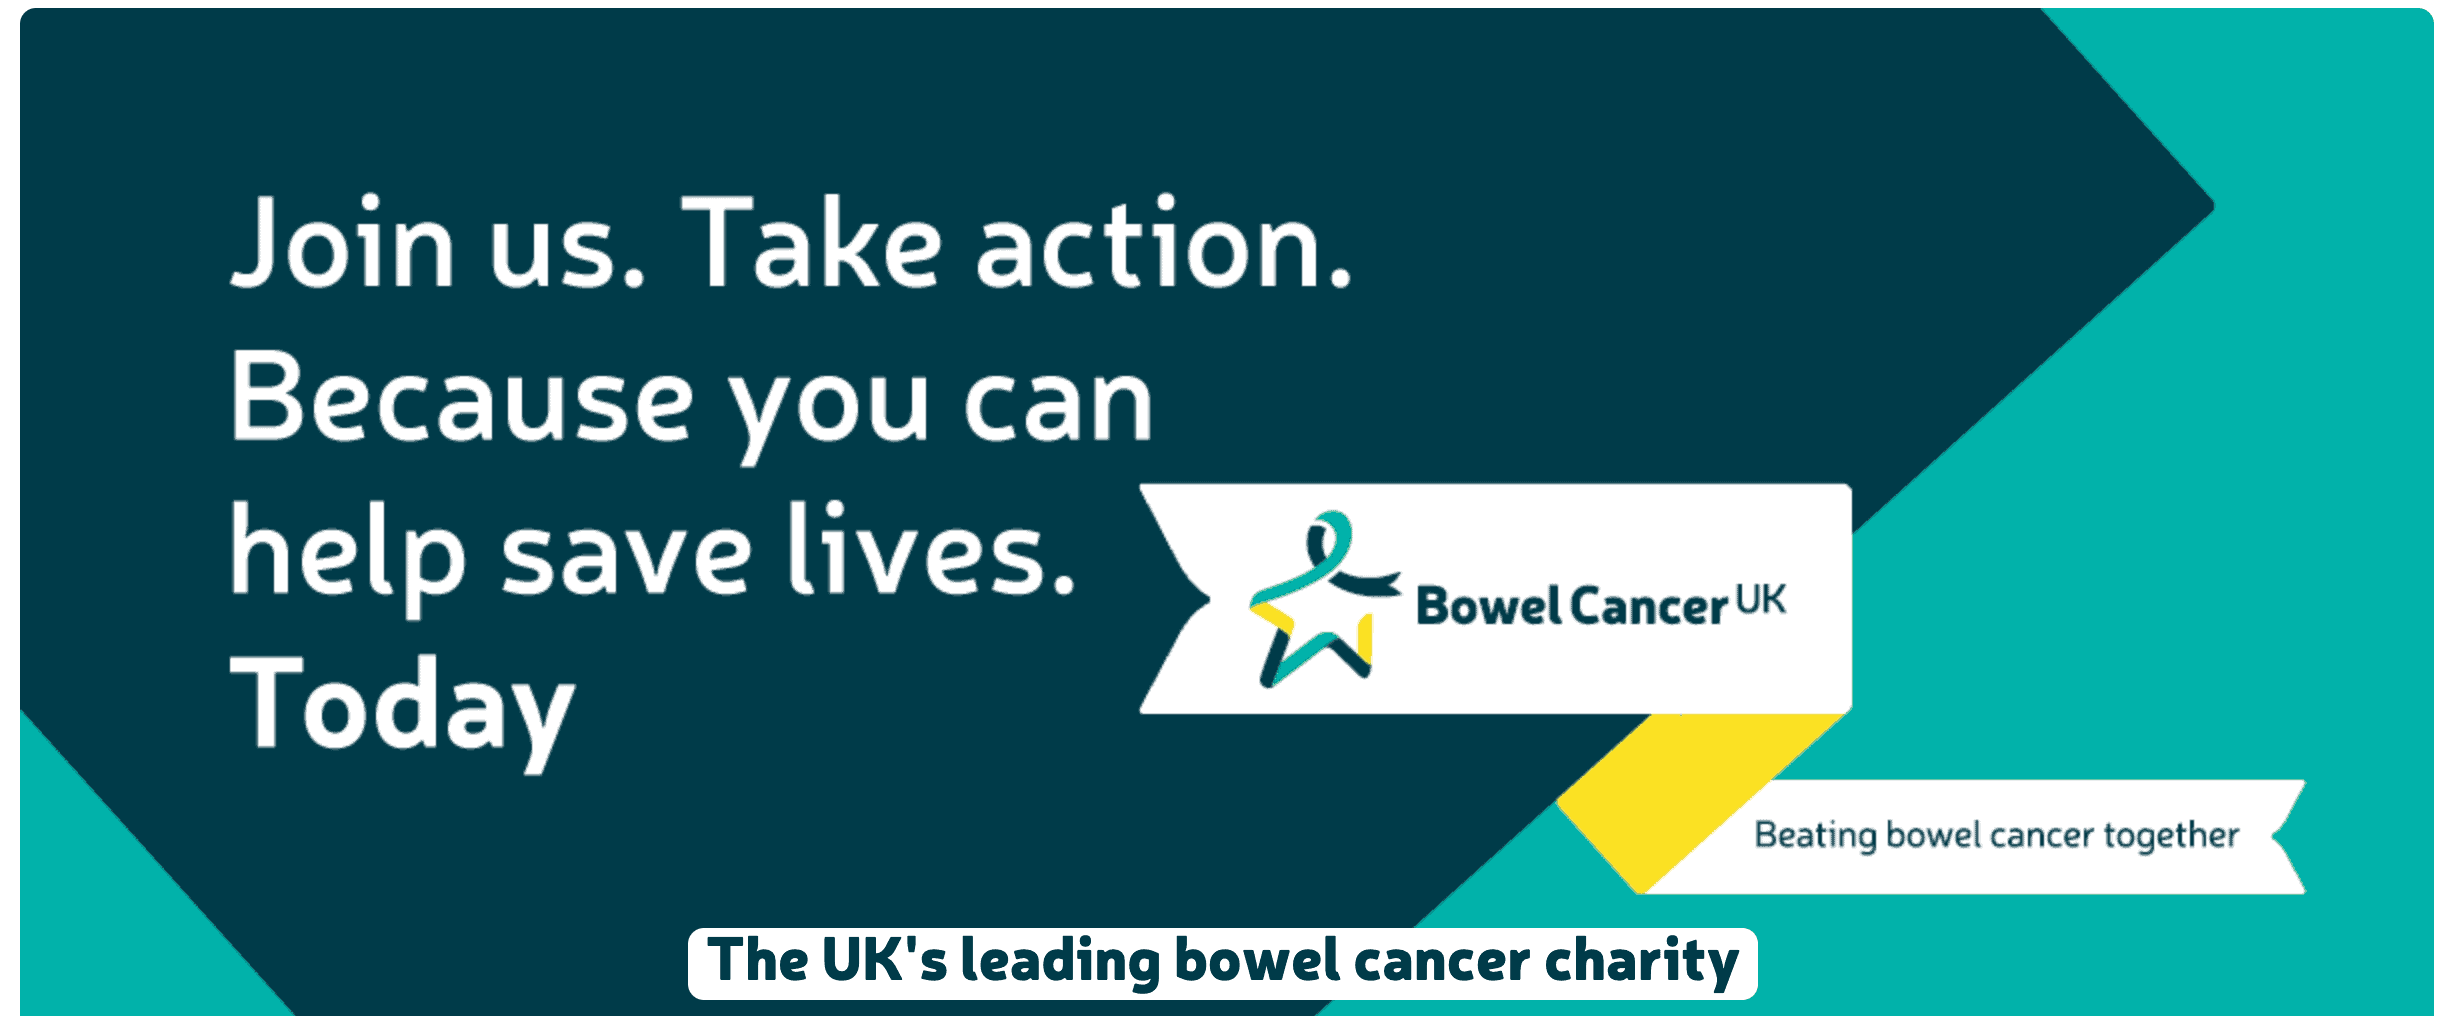 bowel cancer uk charity